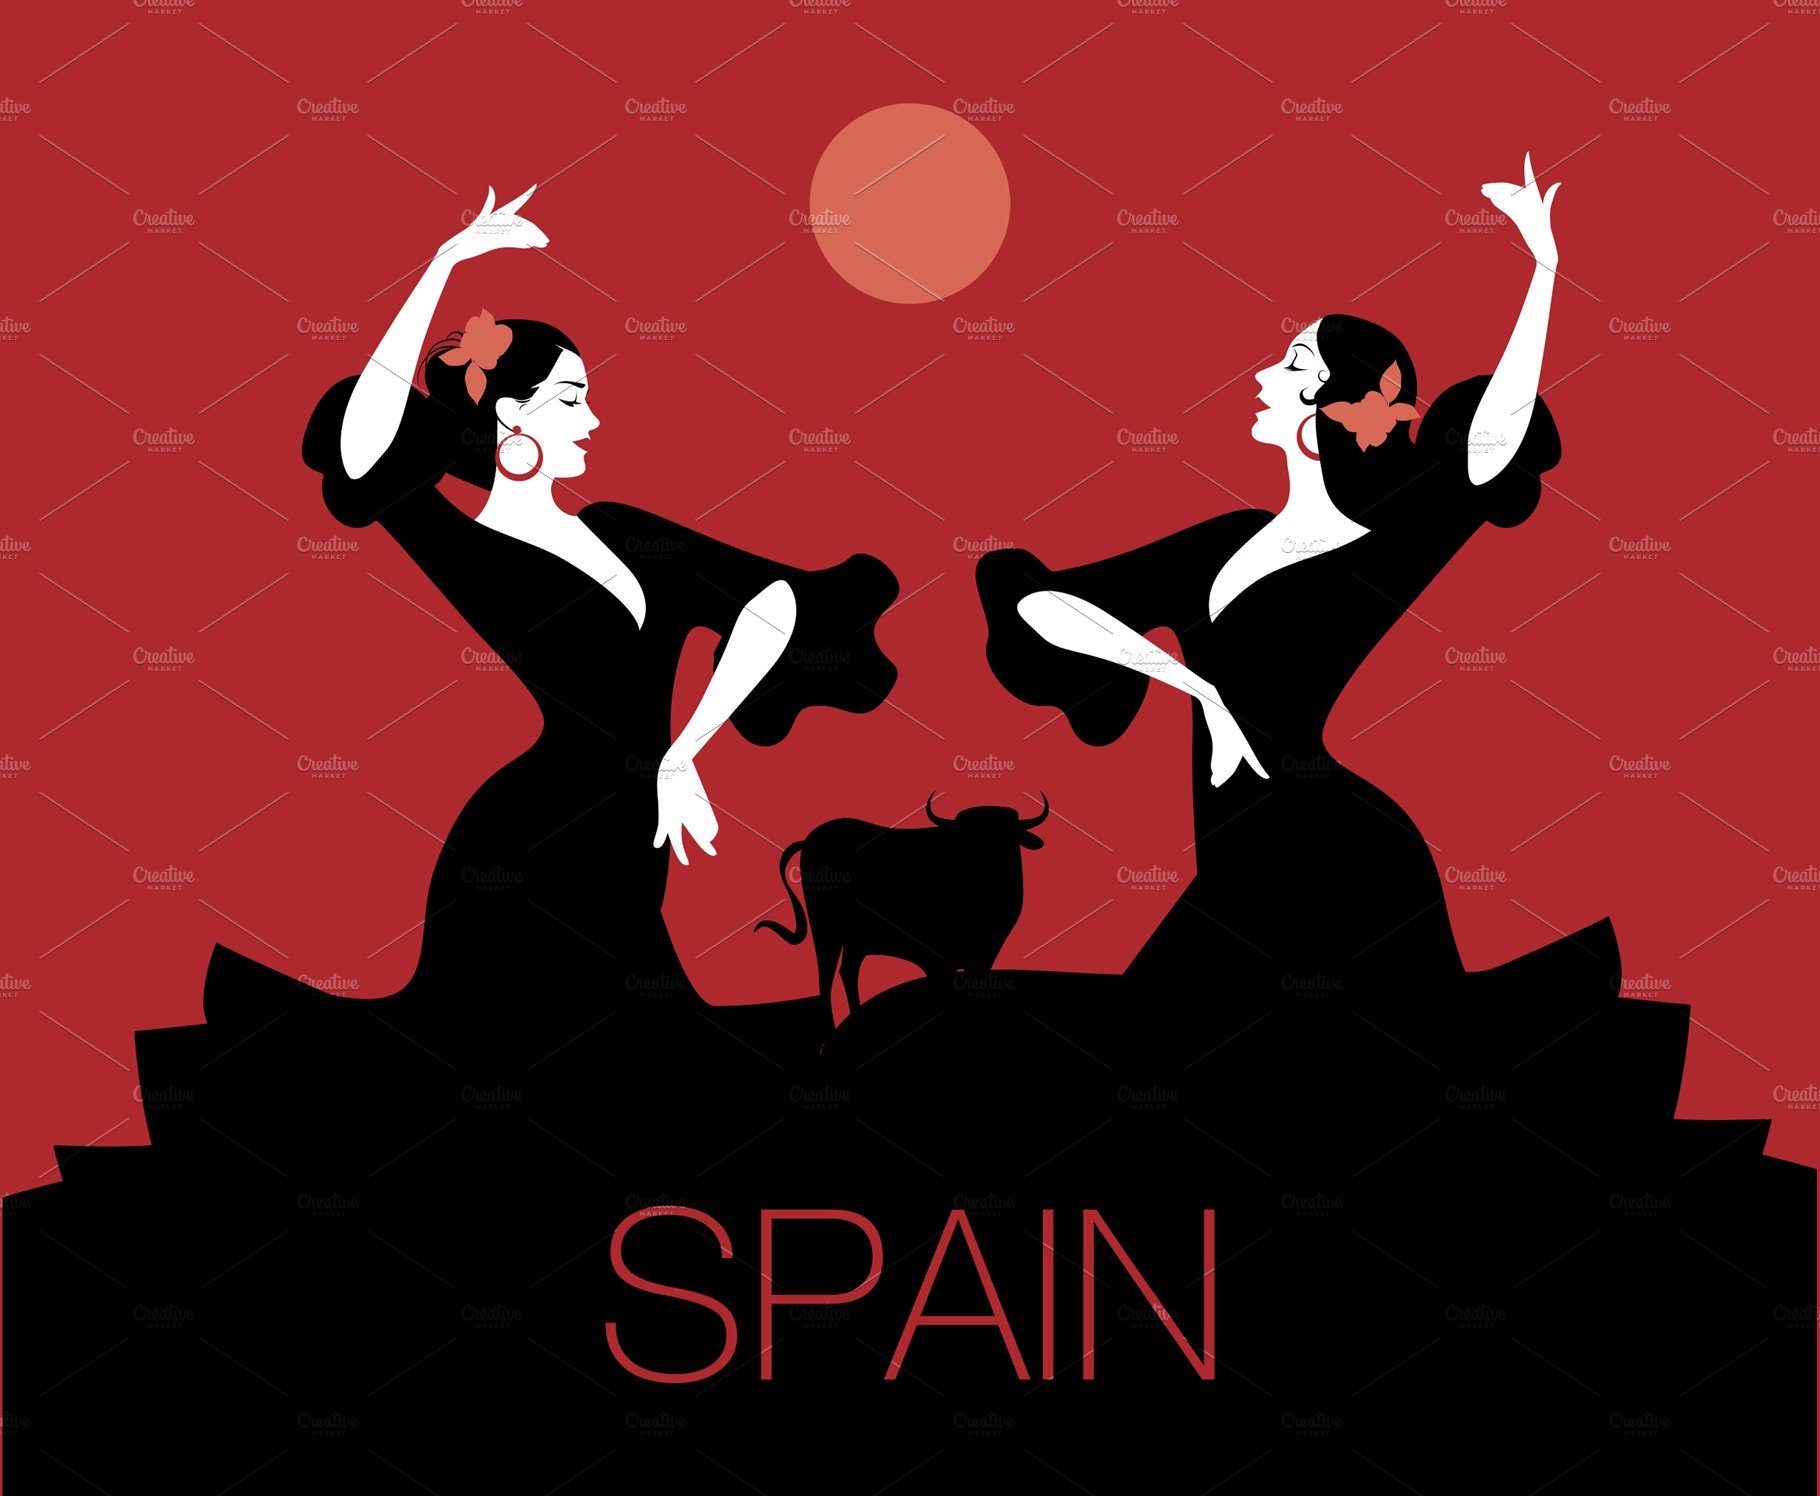 Two Spanish Flamenco Dancers I cover image.